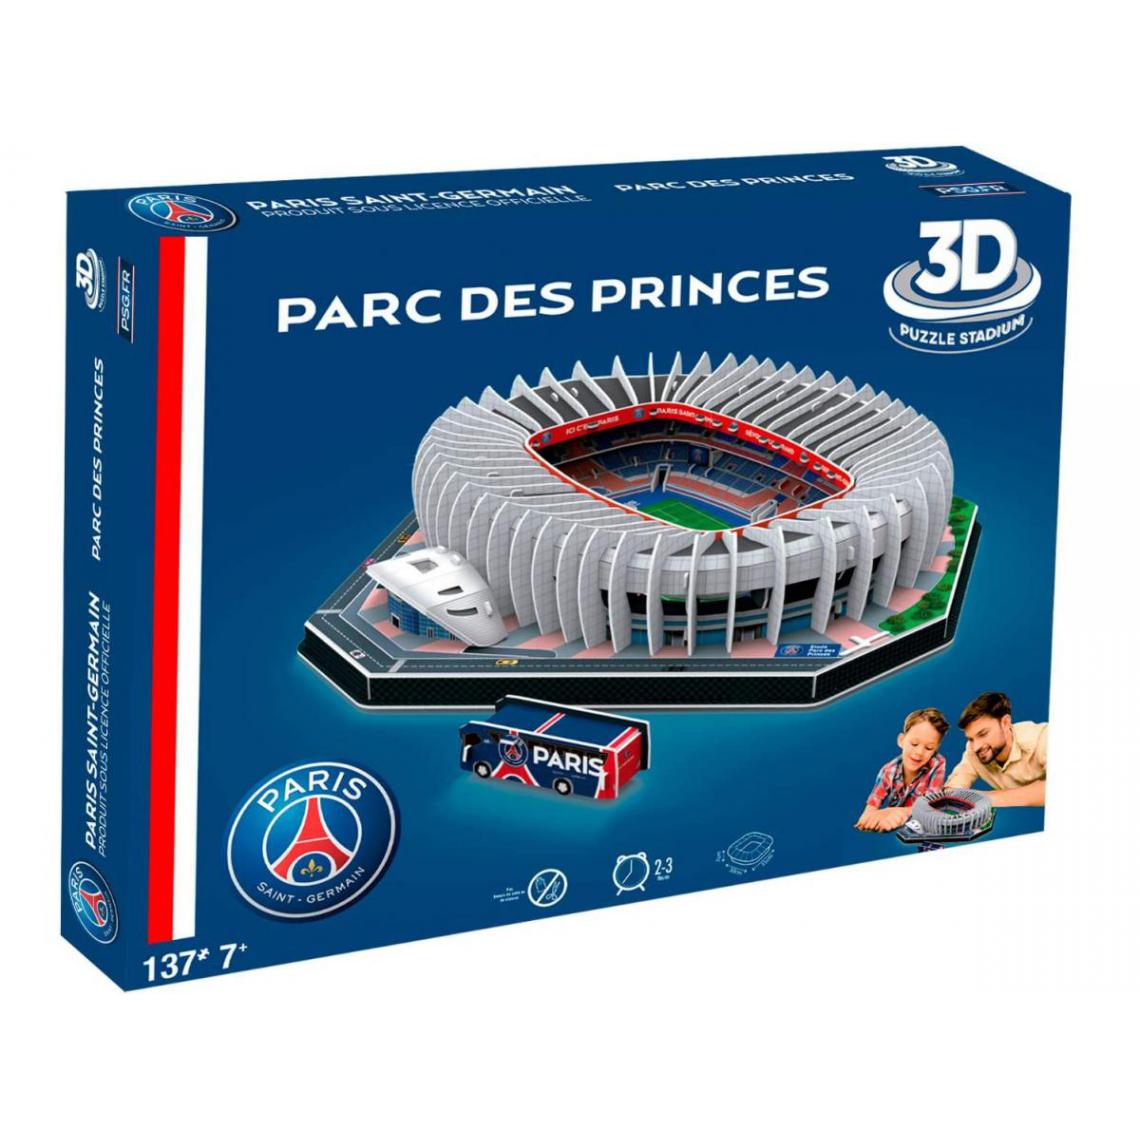 Megableu Editions - Megableu editions - Puzzle Stade 3D Parc des Princes - PSG - Accessoires maquettes